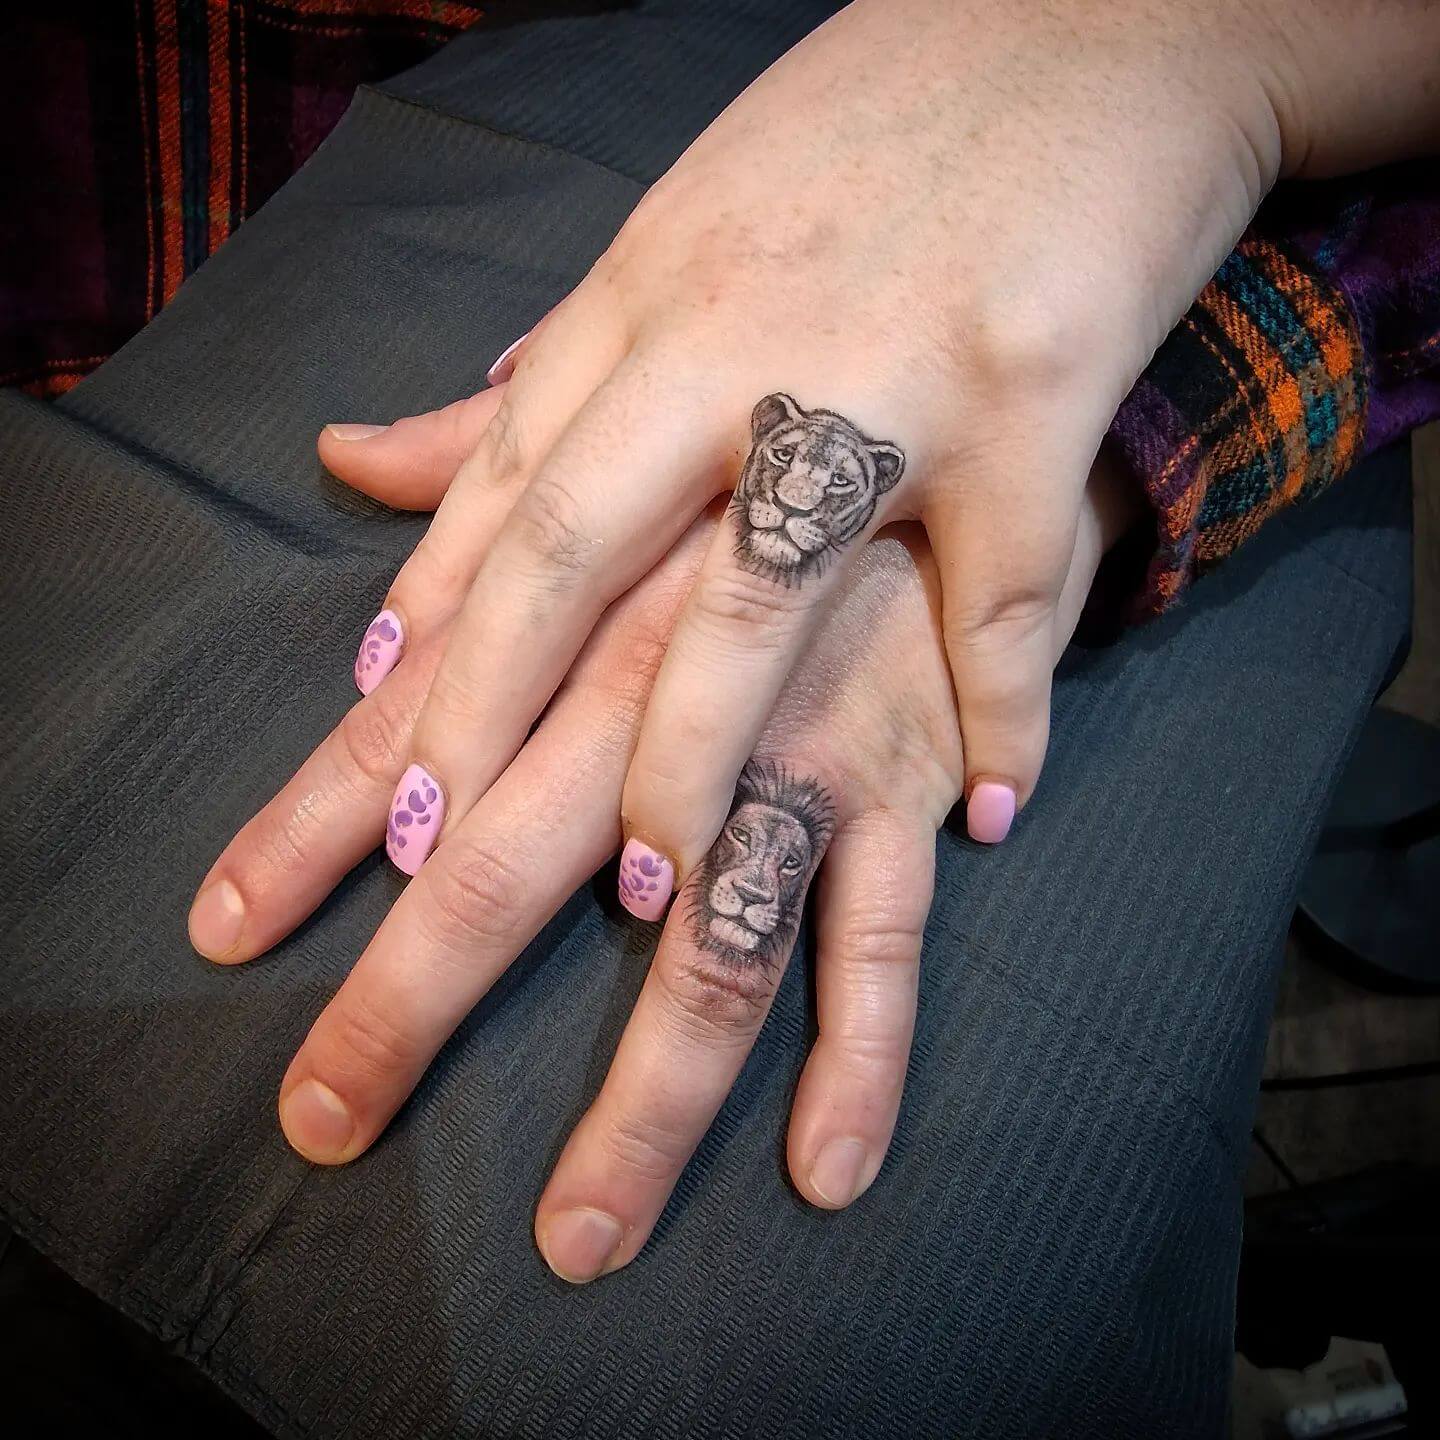 Sister Finger Tattoos - Best Tattoo Ideas Gallery